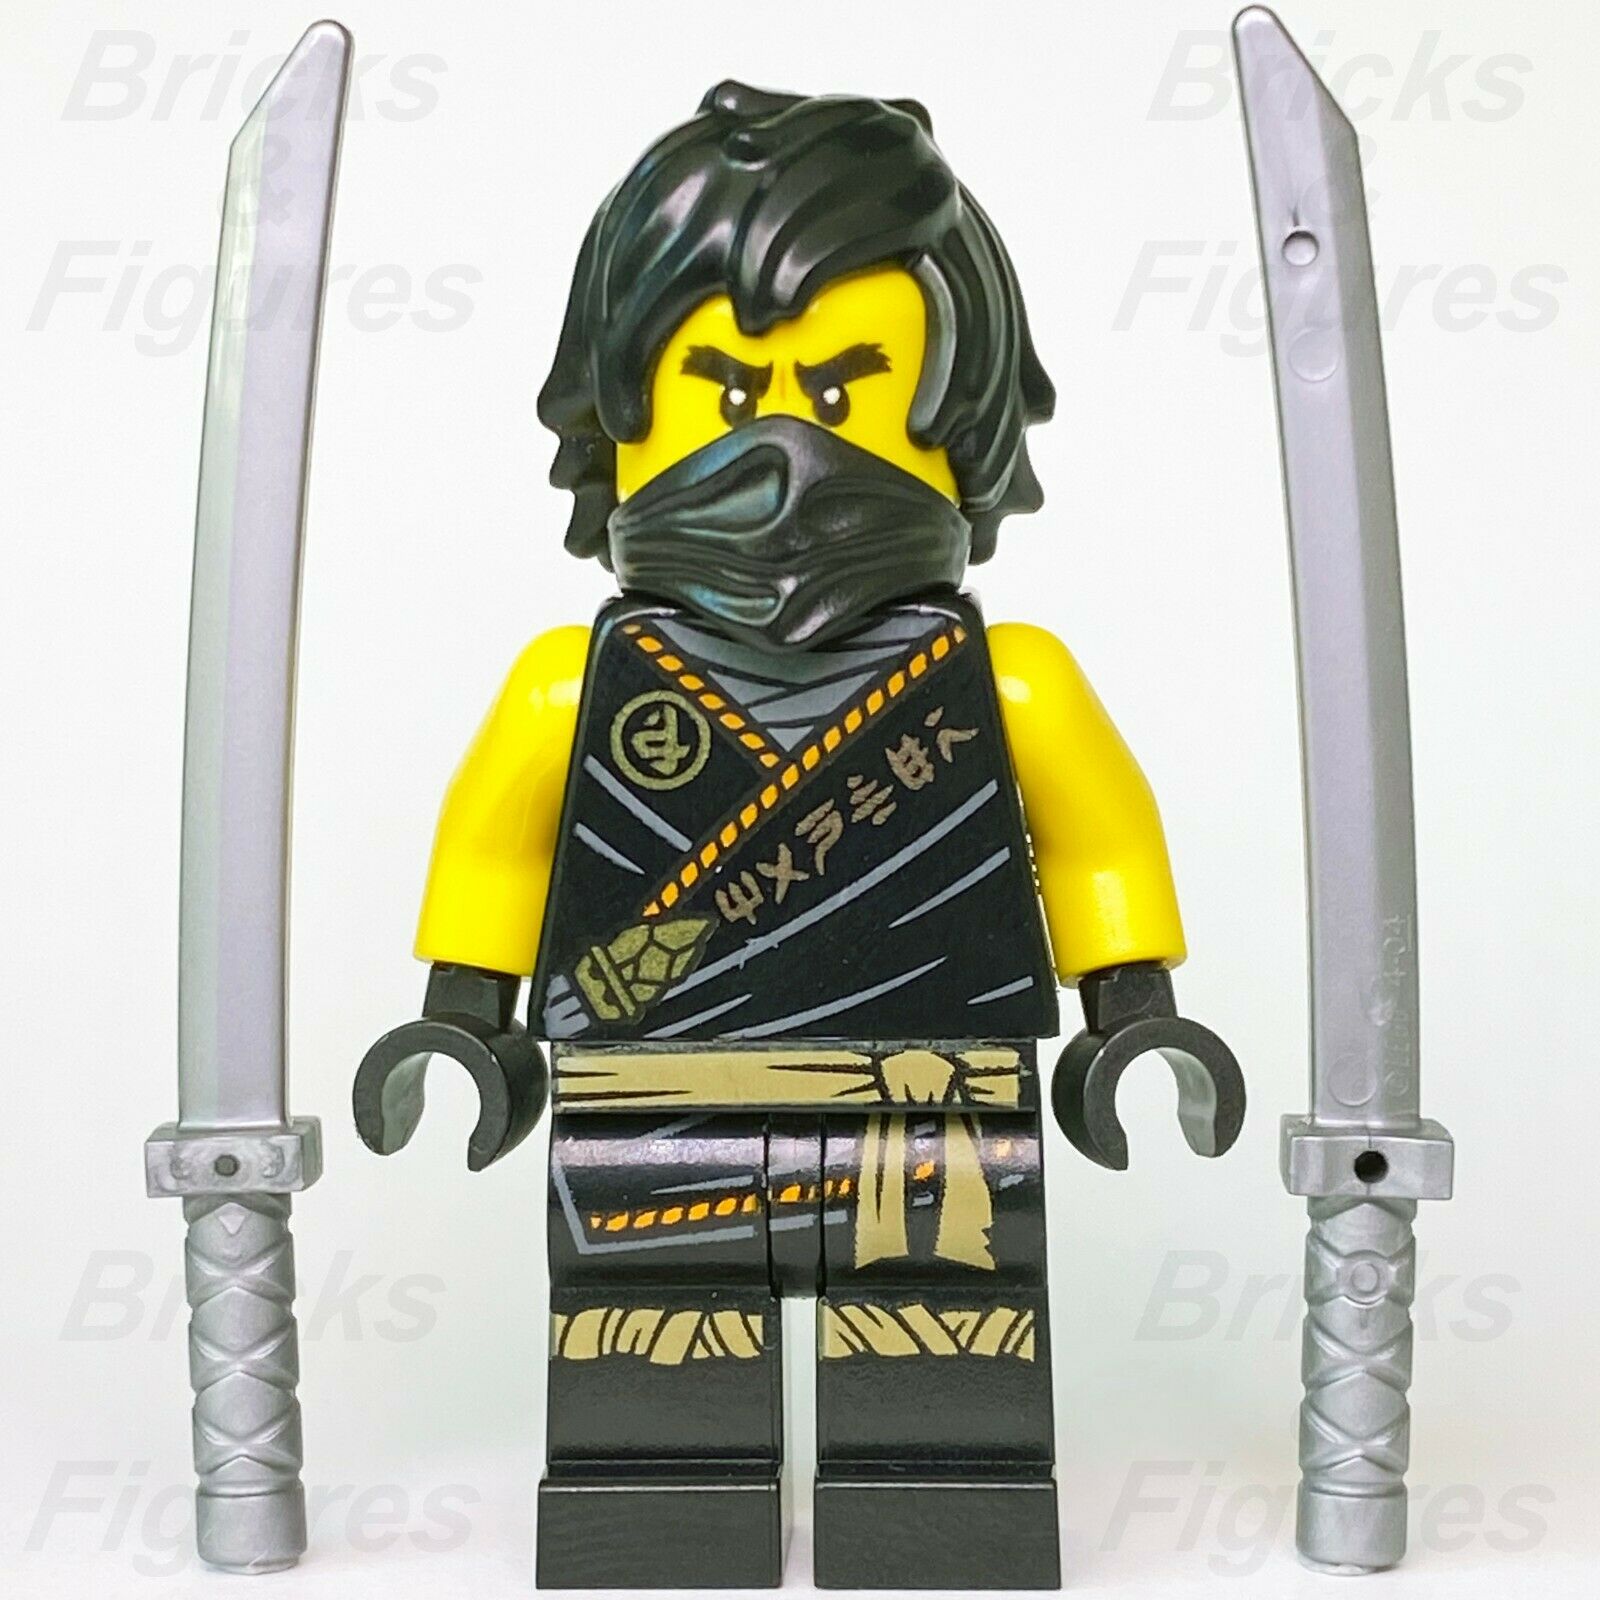 New Ninjago LEGO Cole Legacy Rebooted Black Ninja Minifigure with Swords 71669 - Bricks & Figures